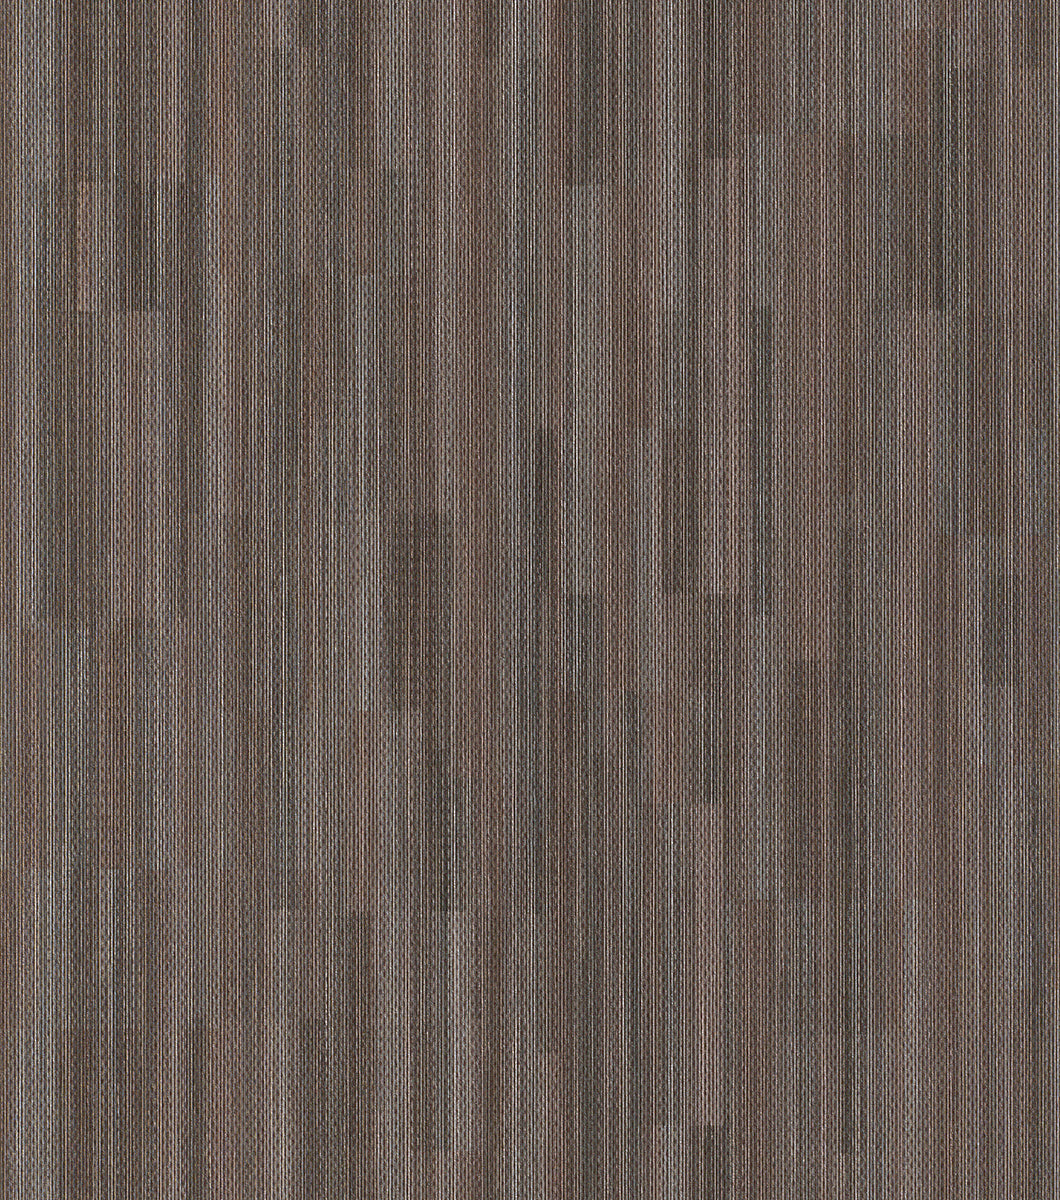 Textured Geometric Brown Grazed Block Wallpaper R4420